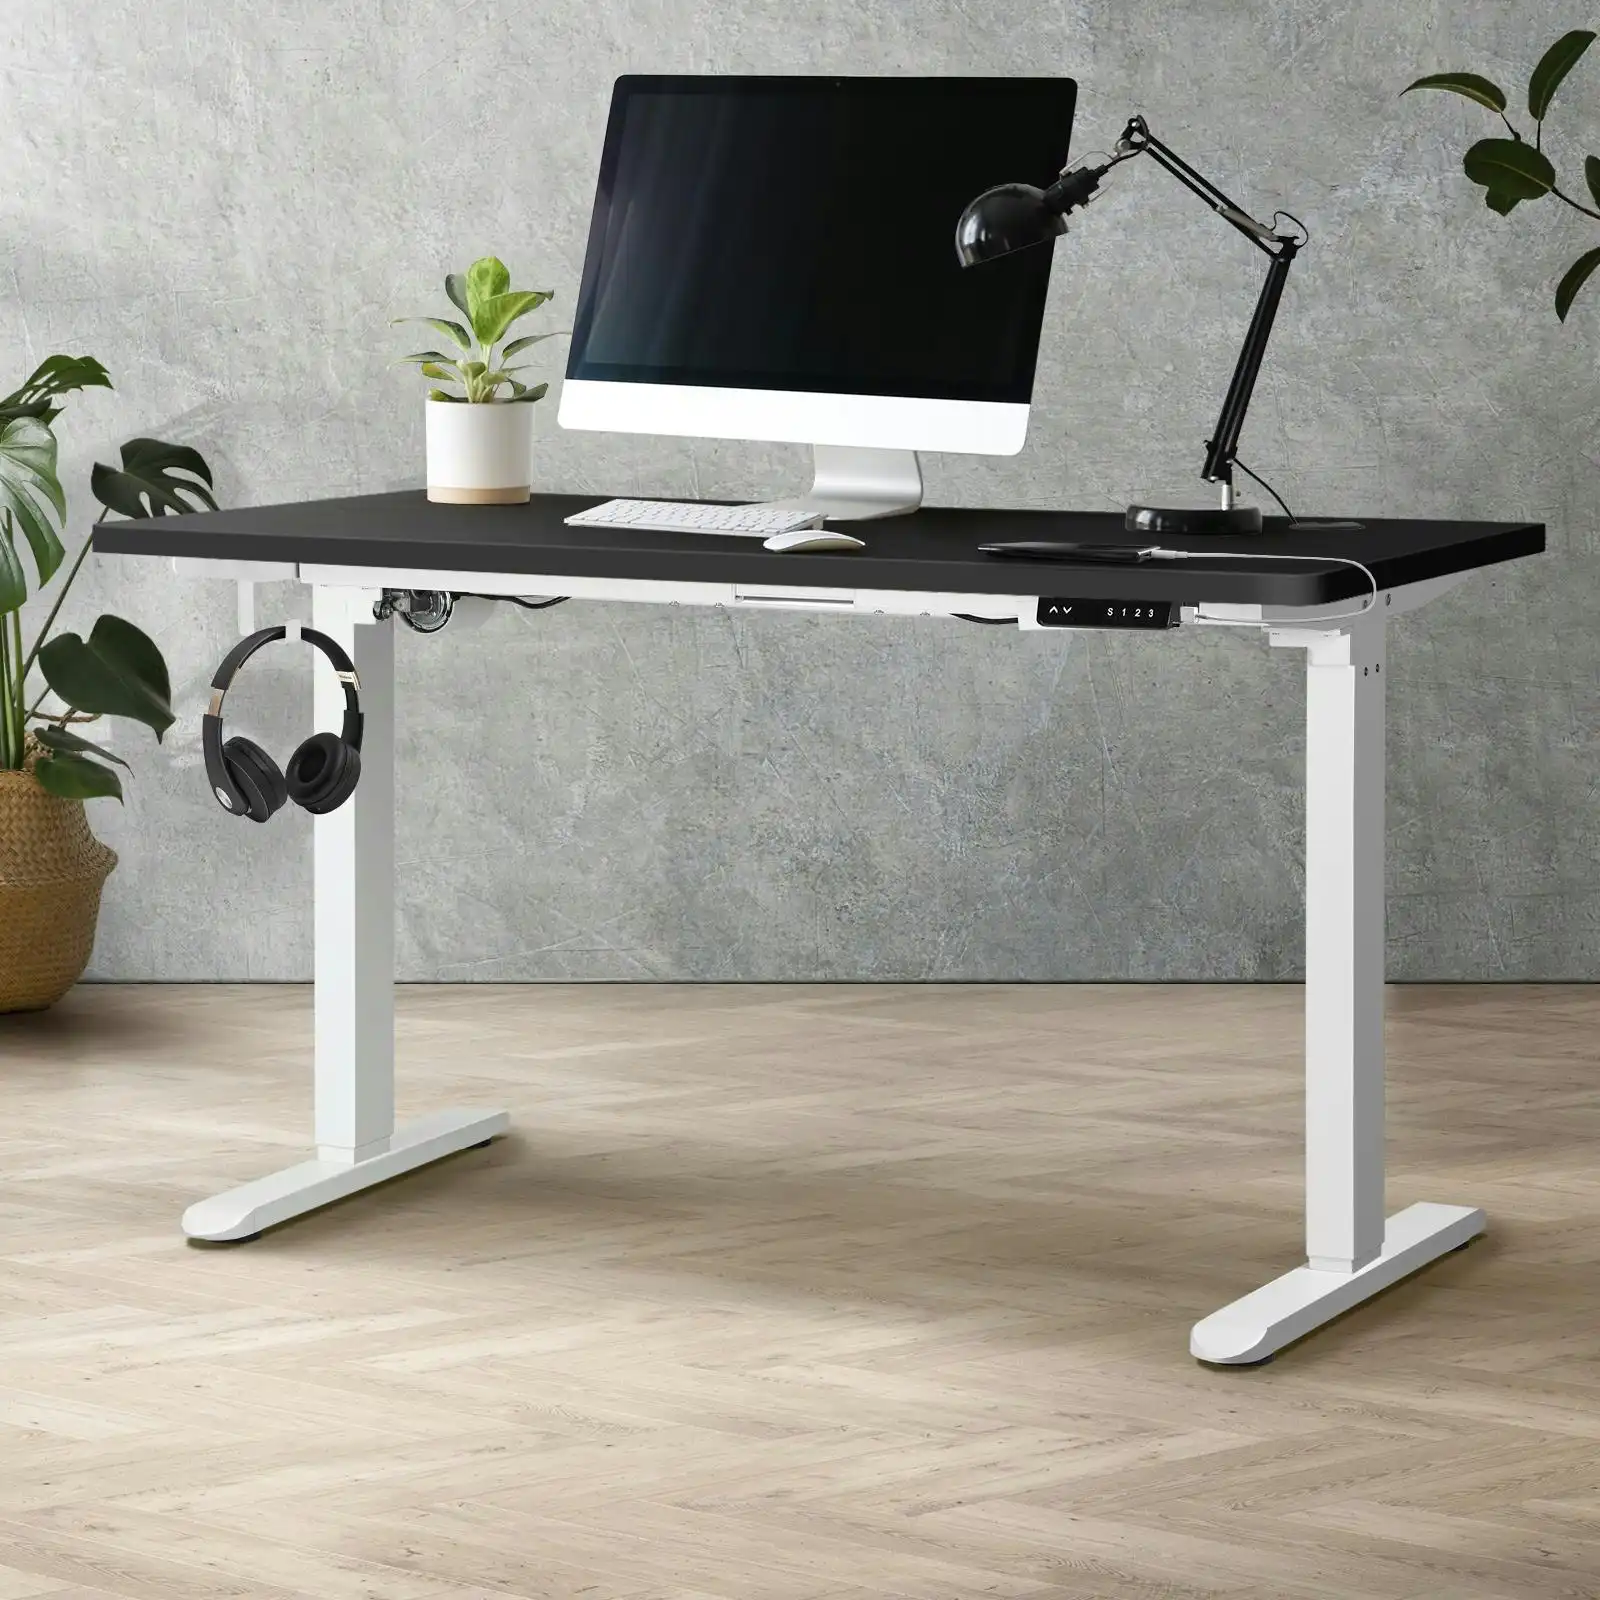 Oikiture 140cm Electric Standing Desk Single Motor Black Desktop With USB&Type C Port